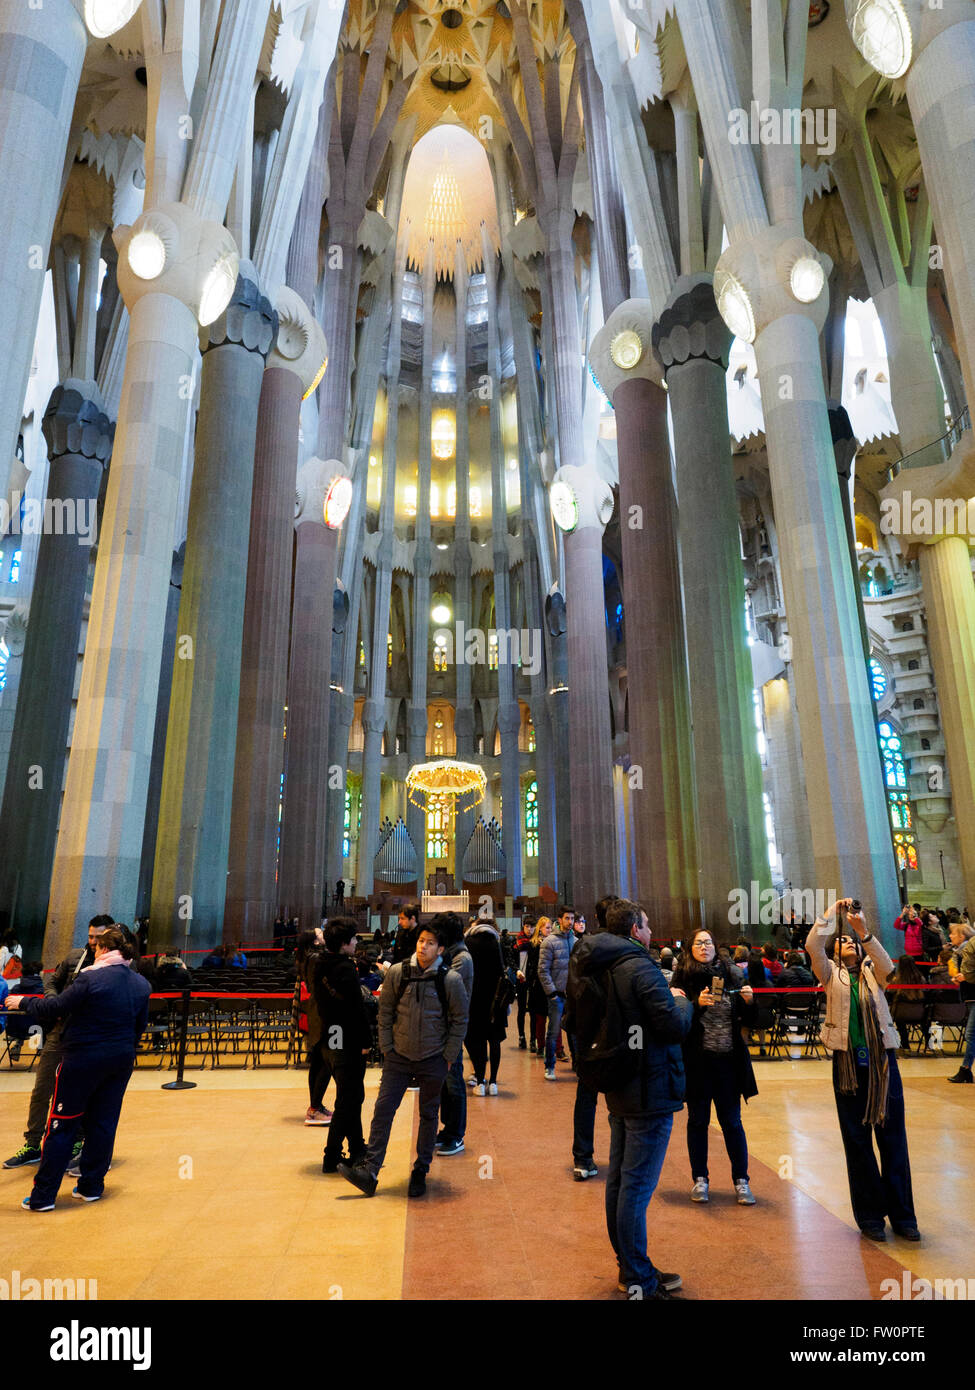 Le Temple Expiatori Basílica je de la Sagrada Família conçu par l'architecte espagnol Antoni Gaudí - Barcelone, Espagne Banque D'Images